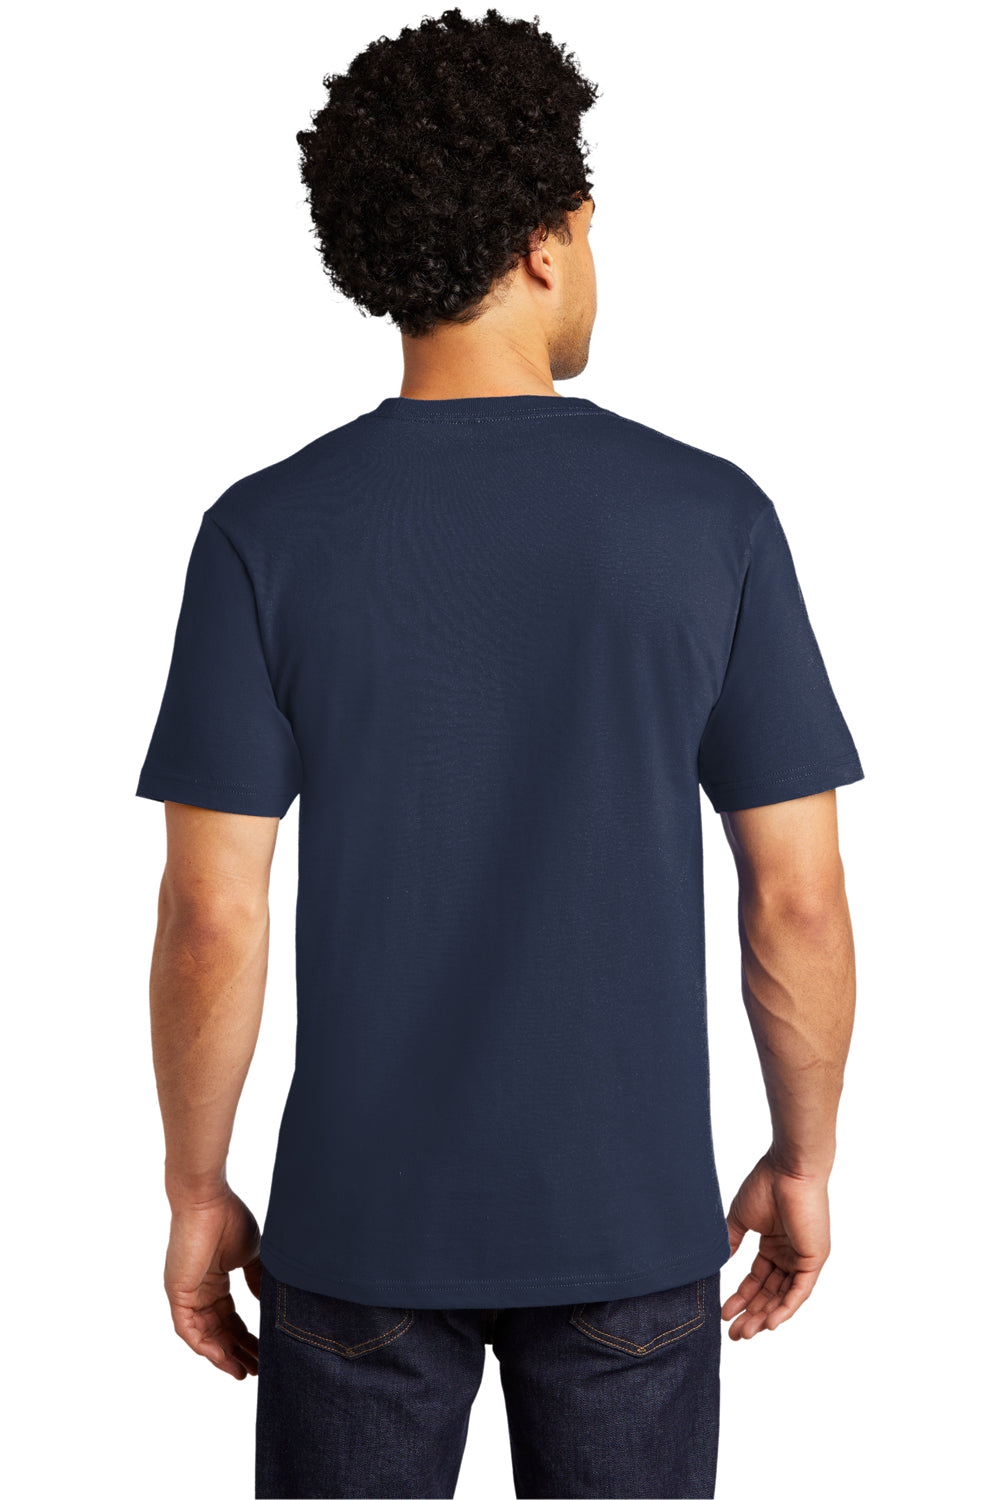 Port & Company Mens Bouncer Short Sleeve Crewneck T-Shirt w/ Pocket Navy Blue Side